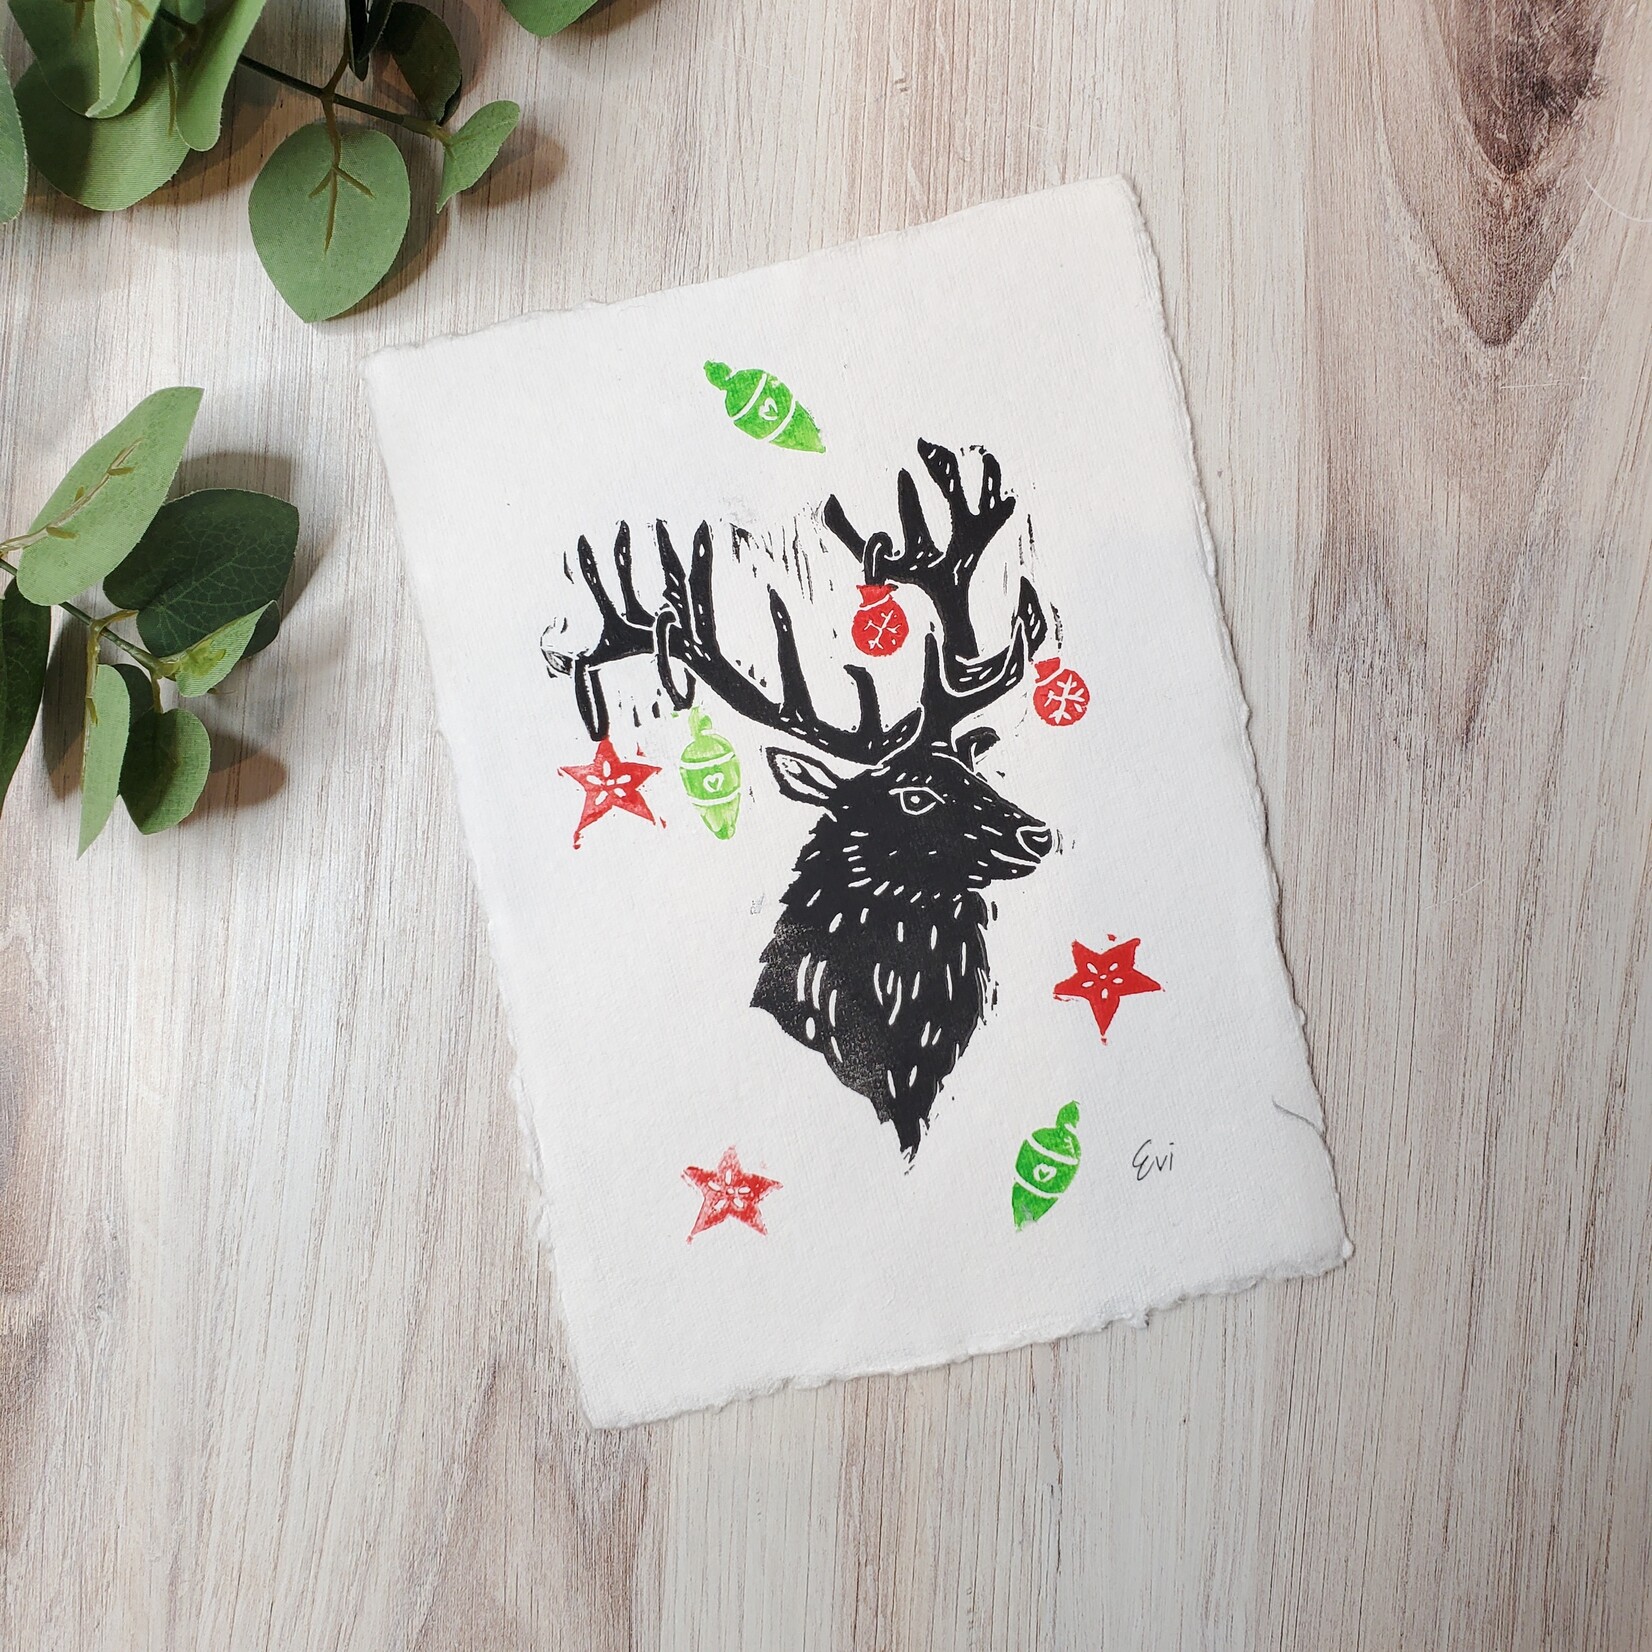 Evi Studio "Reindeer" - Lino Block print on handmade paper